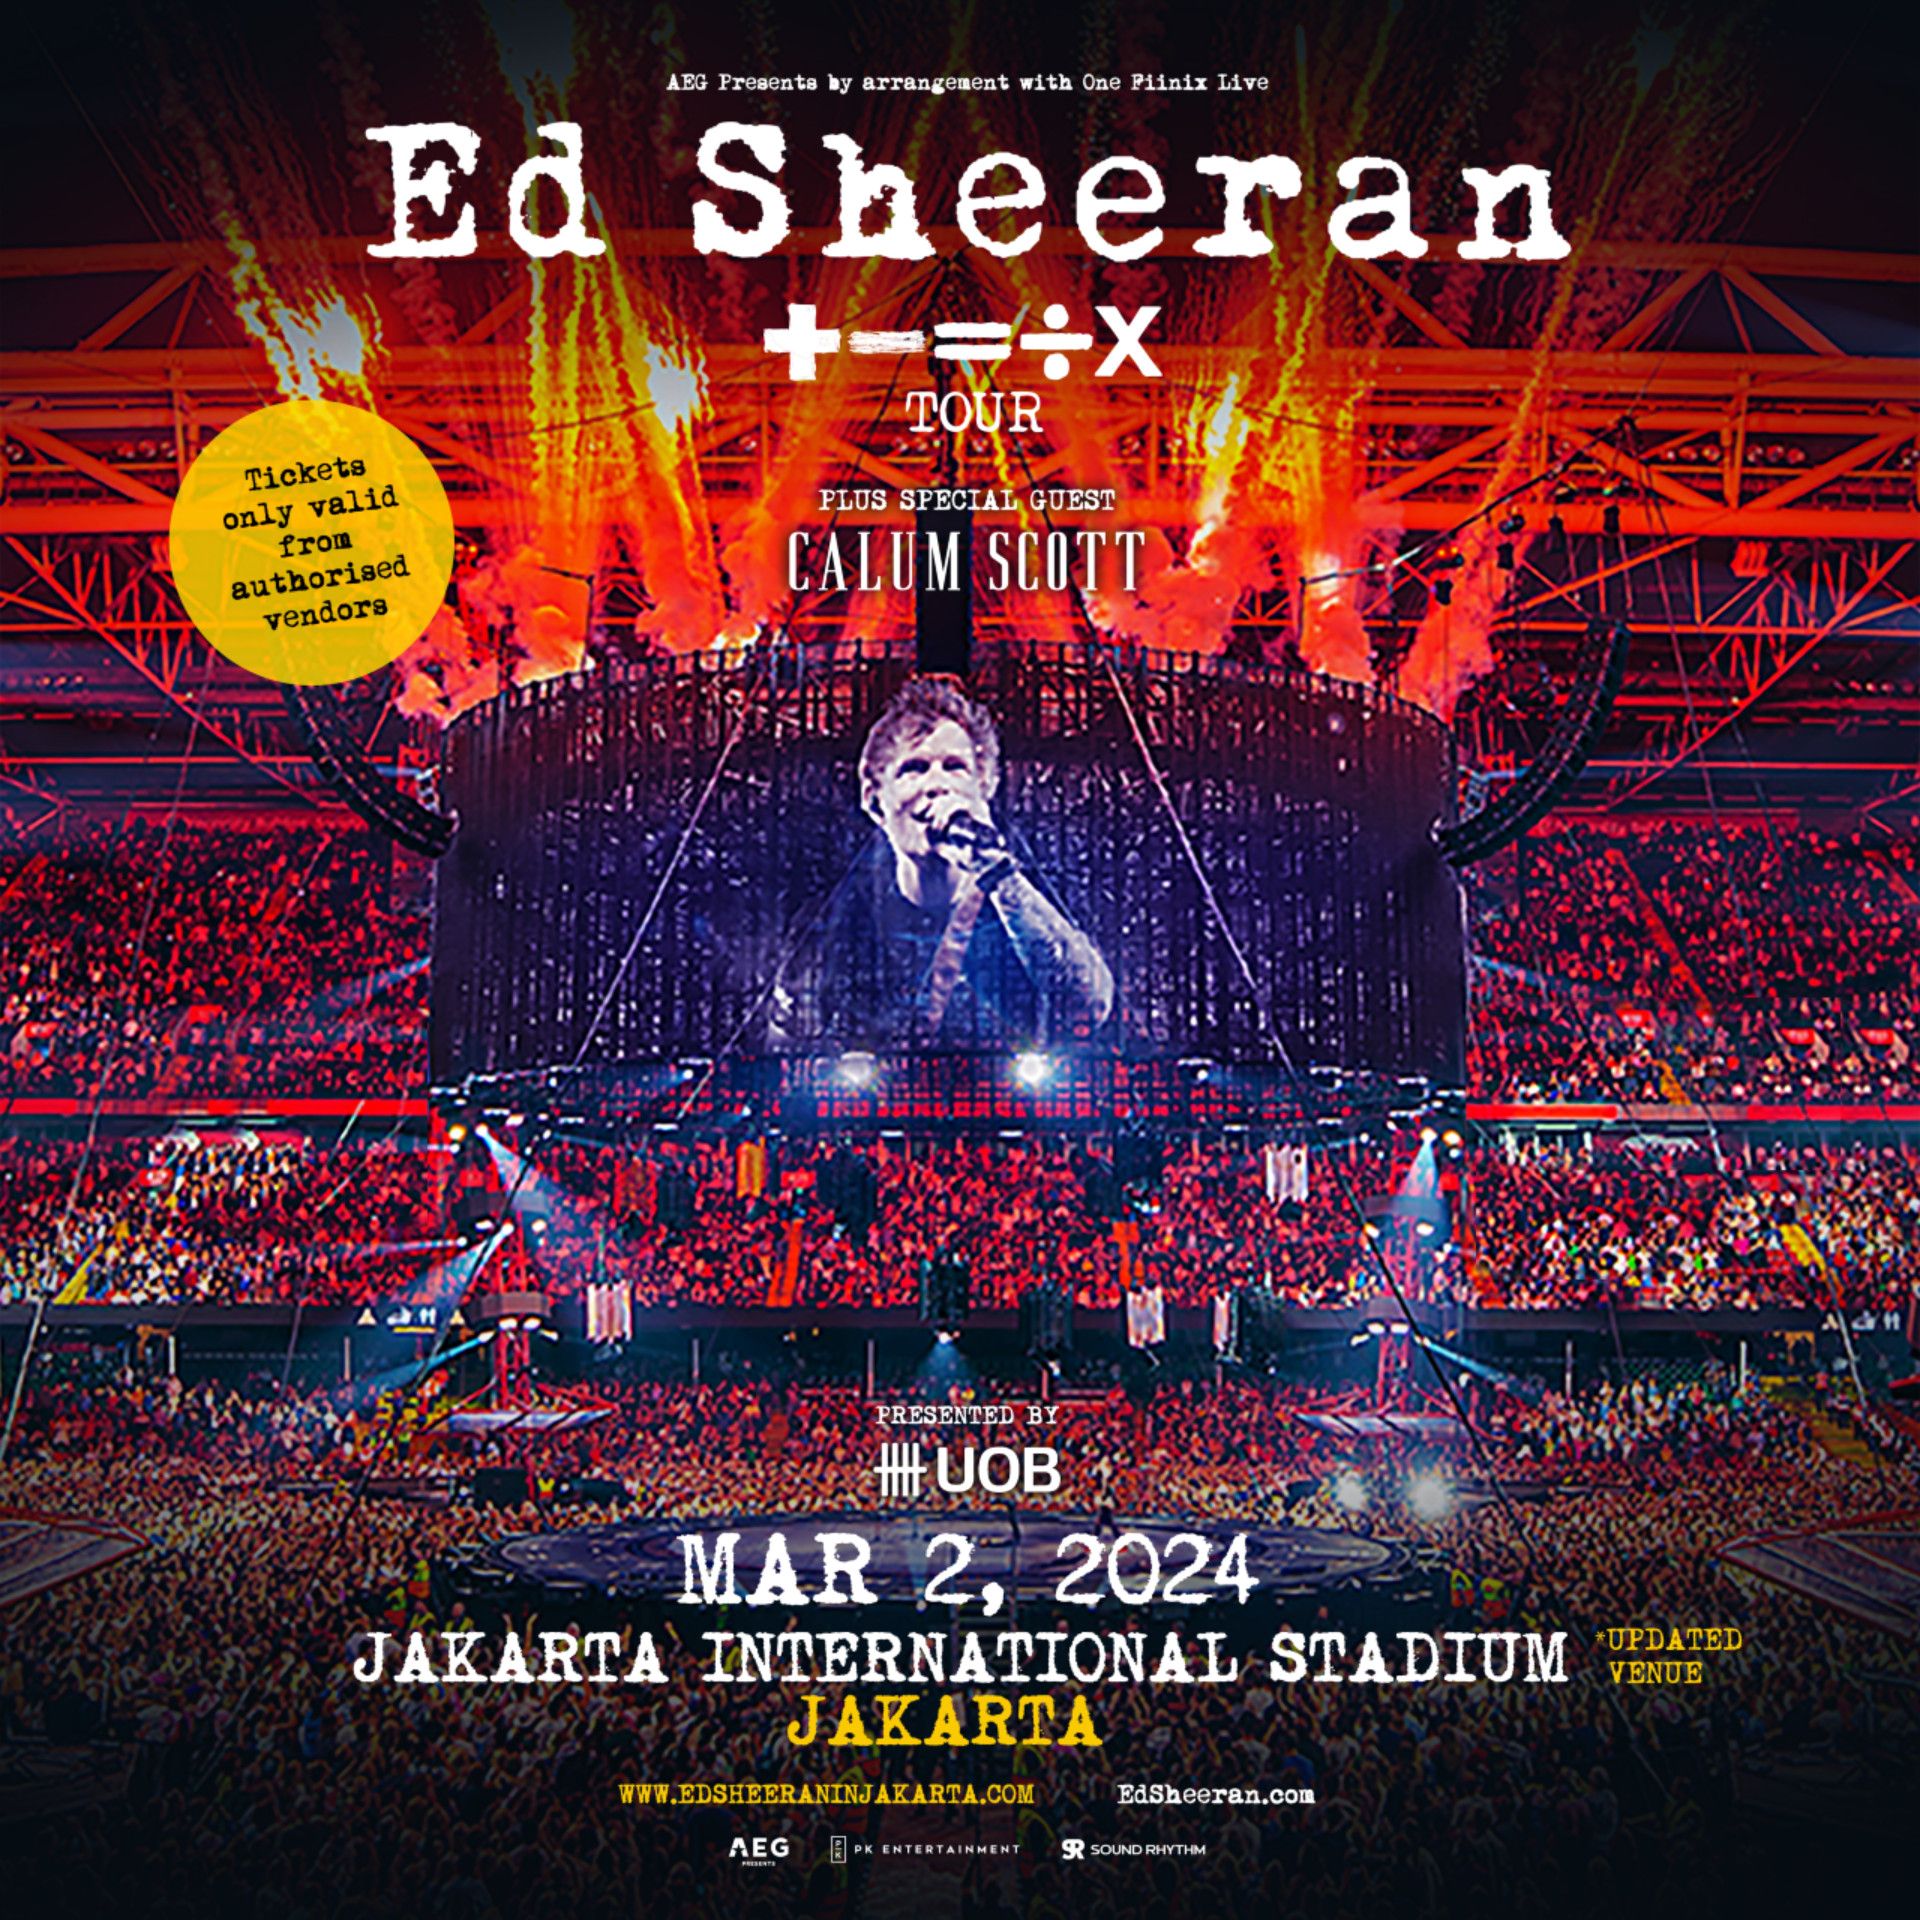 Konser  Ed Sheeran + - = ÷ x Tour 2024 di Jakarta 